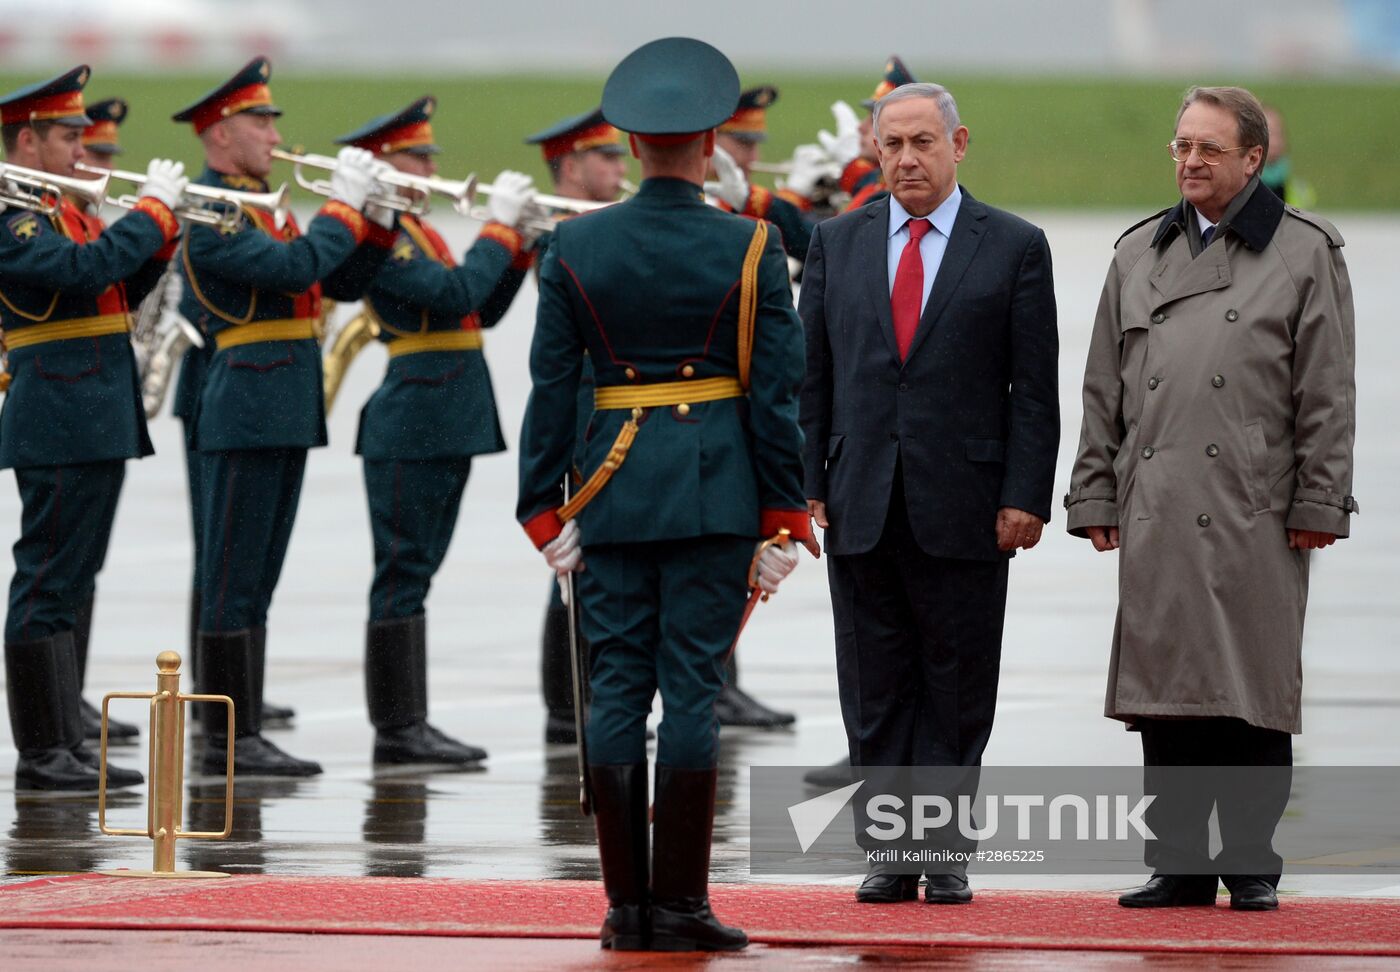 Israeli Prime Minister Benjamin Netanyahu arrives in Moscow